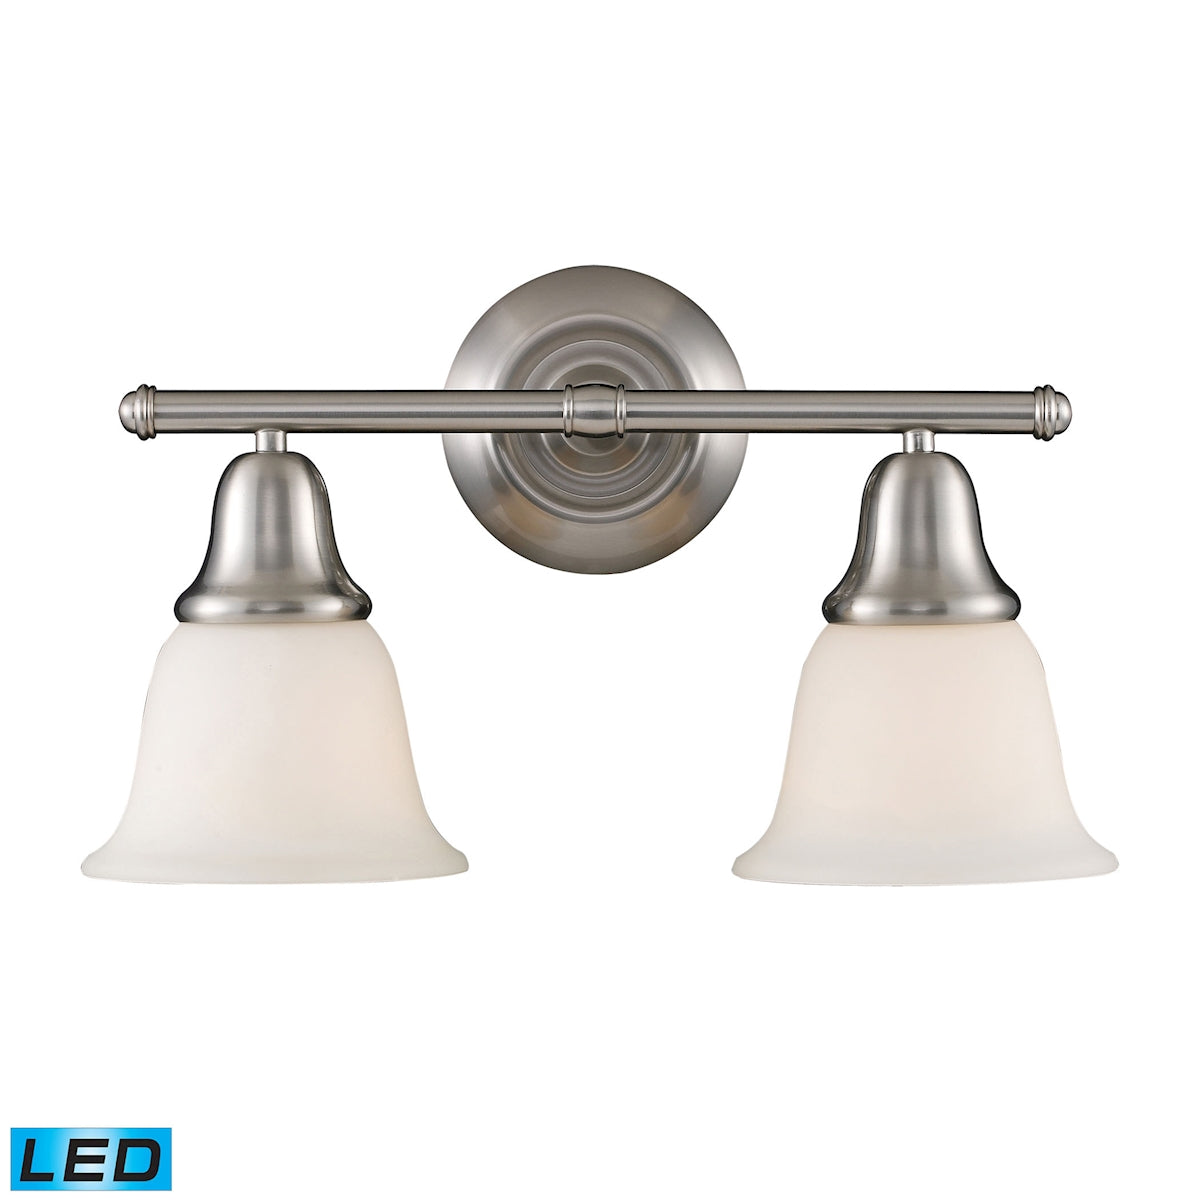 ELK Lighting 67021-2-LED Berwick 2-Light Vanity Lamp in Brushed Nickel with White Glass - Includes LED Bulbs